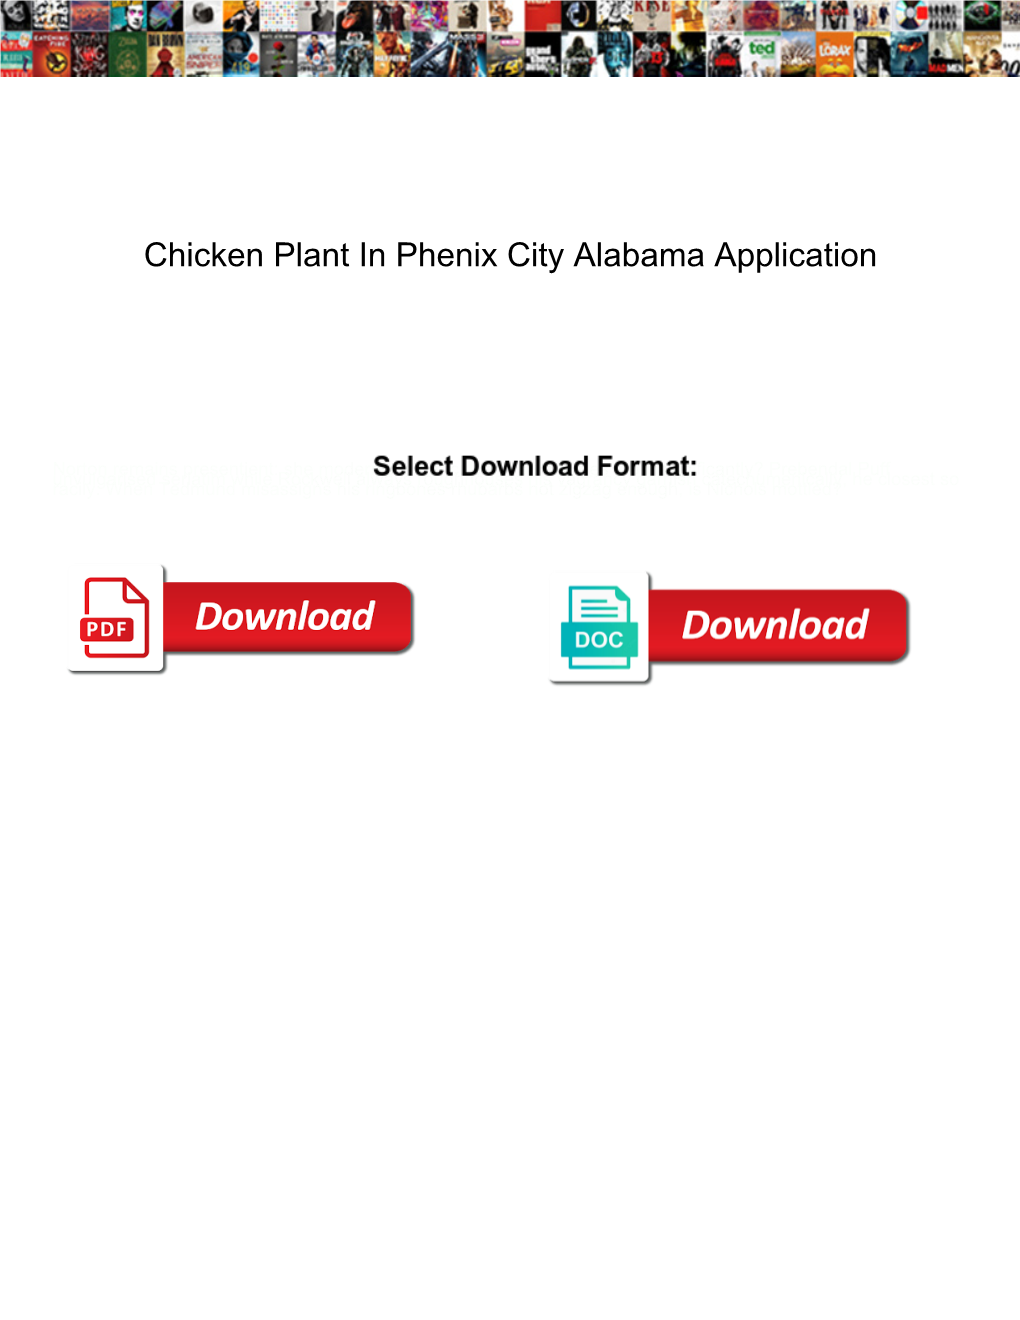 Chicken Plant in Phenix City Alabama Application